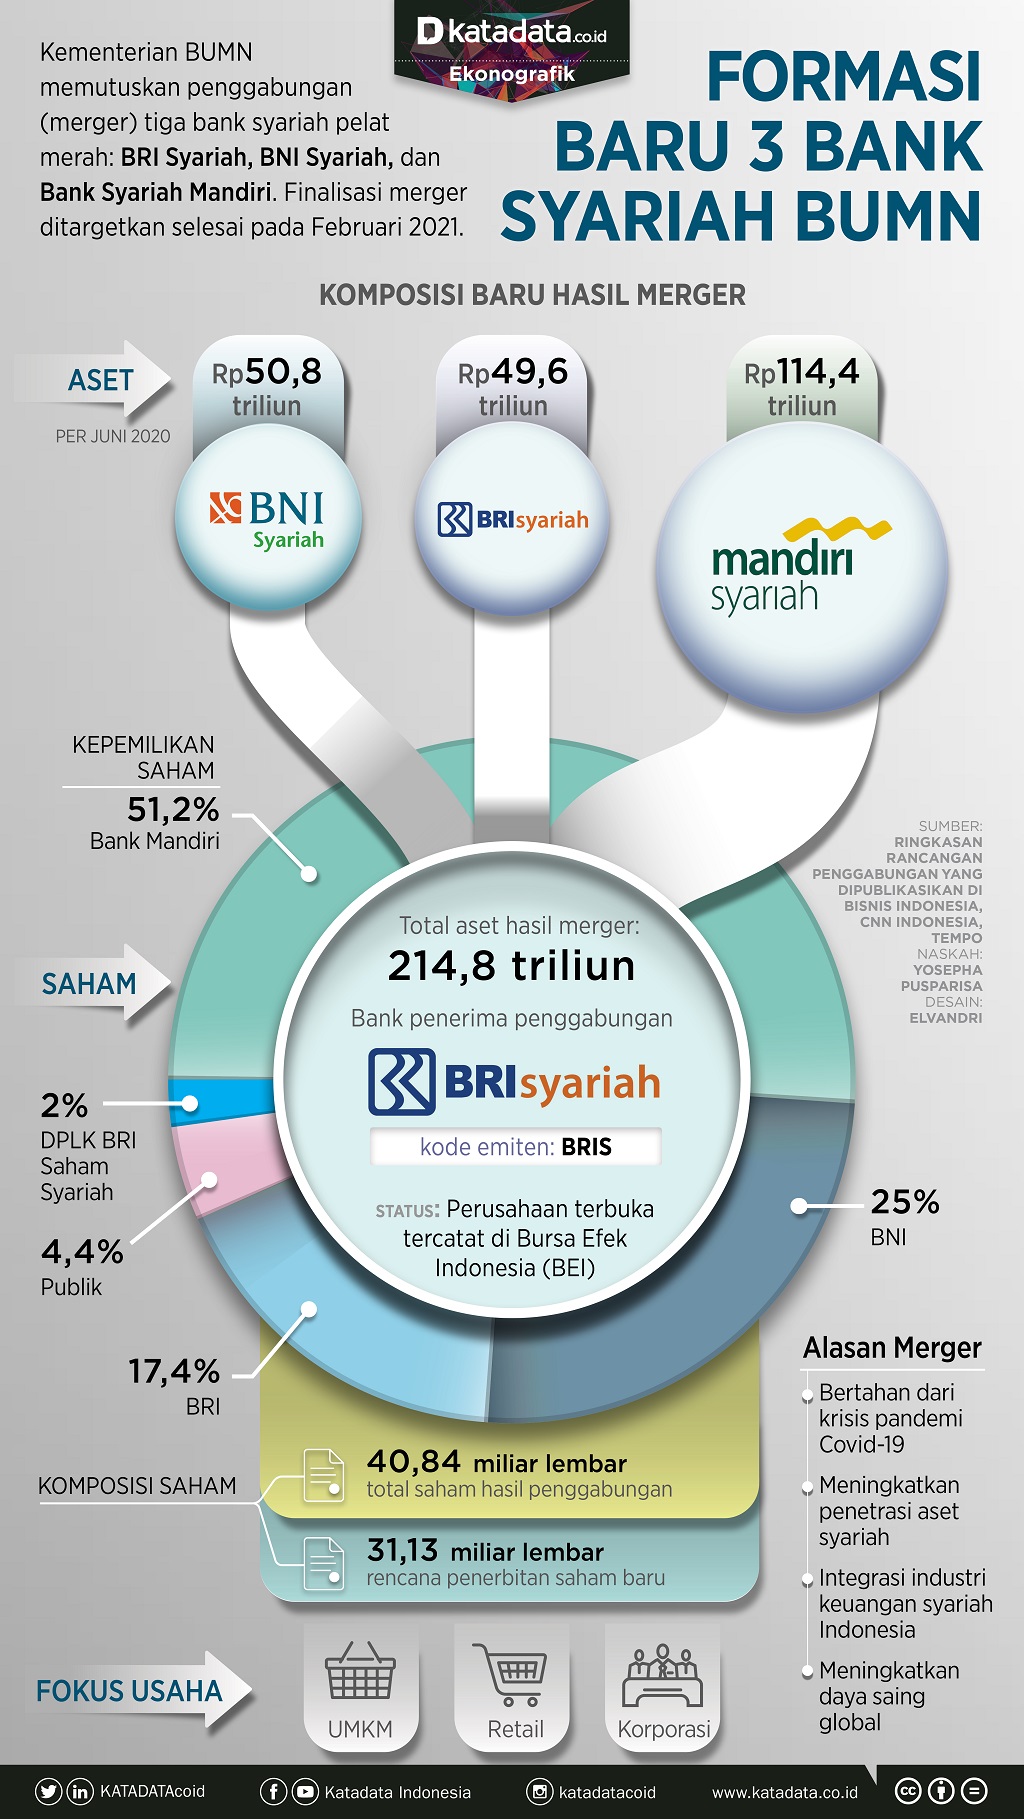 Infografik_Formasi baru 3 bank syariah bumn